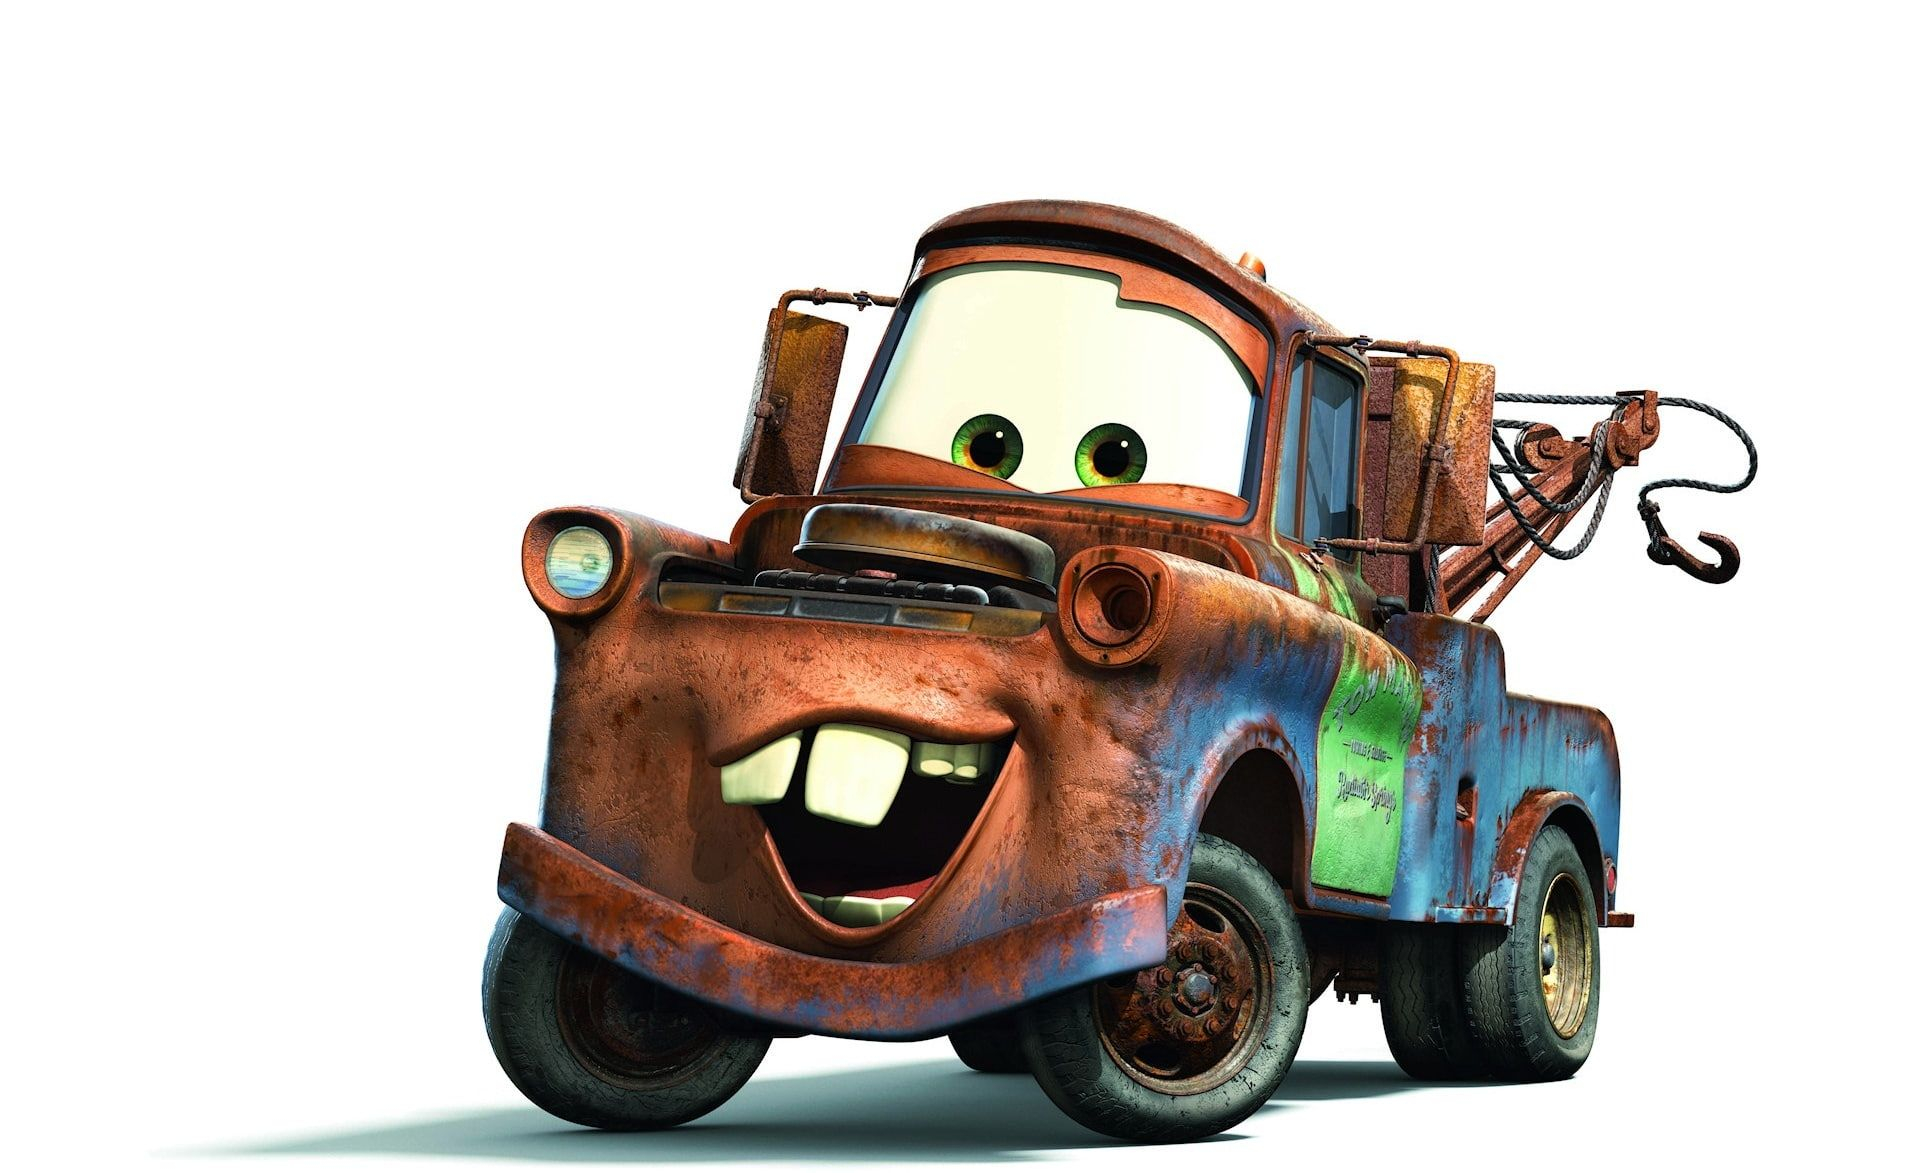 1920x1173 Tow Mater Cars Movie, The Cars Mater #Cartoons #Cars #Cars #Movie #Mater #1080P #wallpaper #hdwallpaper &acirc;&#128;&brvbar; | Imagenes de cars, Cars disney pixar, Carros de pel&Atilde;&shy;culas